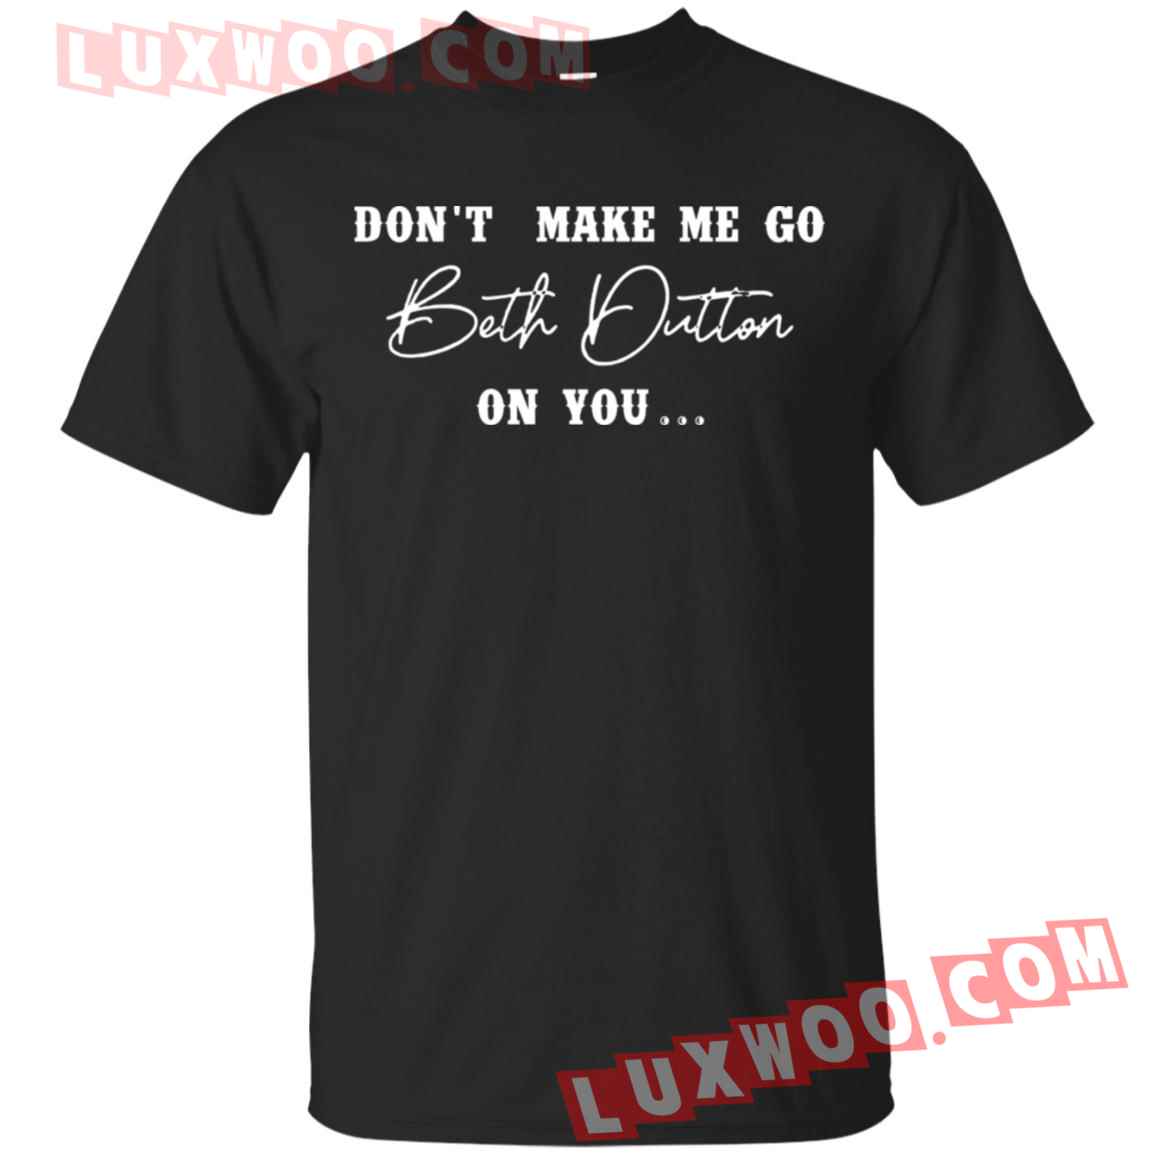 Dont Make Me Go Beth Dutton On You Shirt - Luxwoo.com